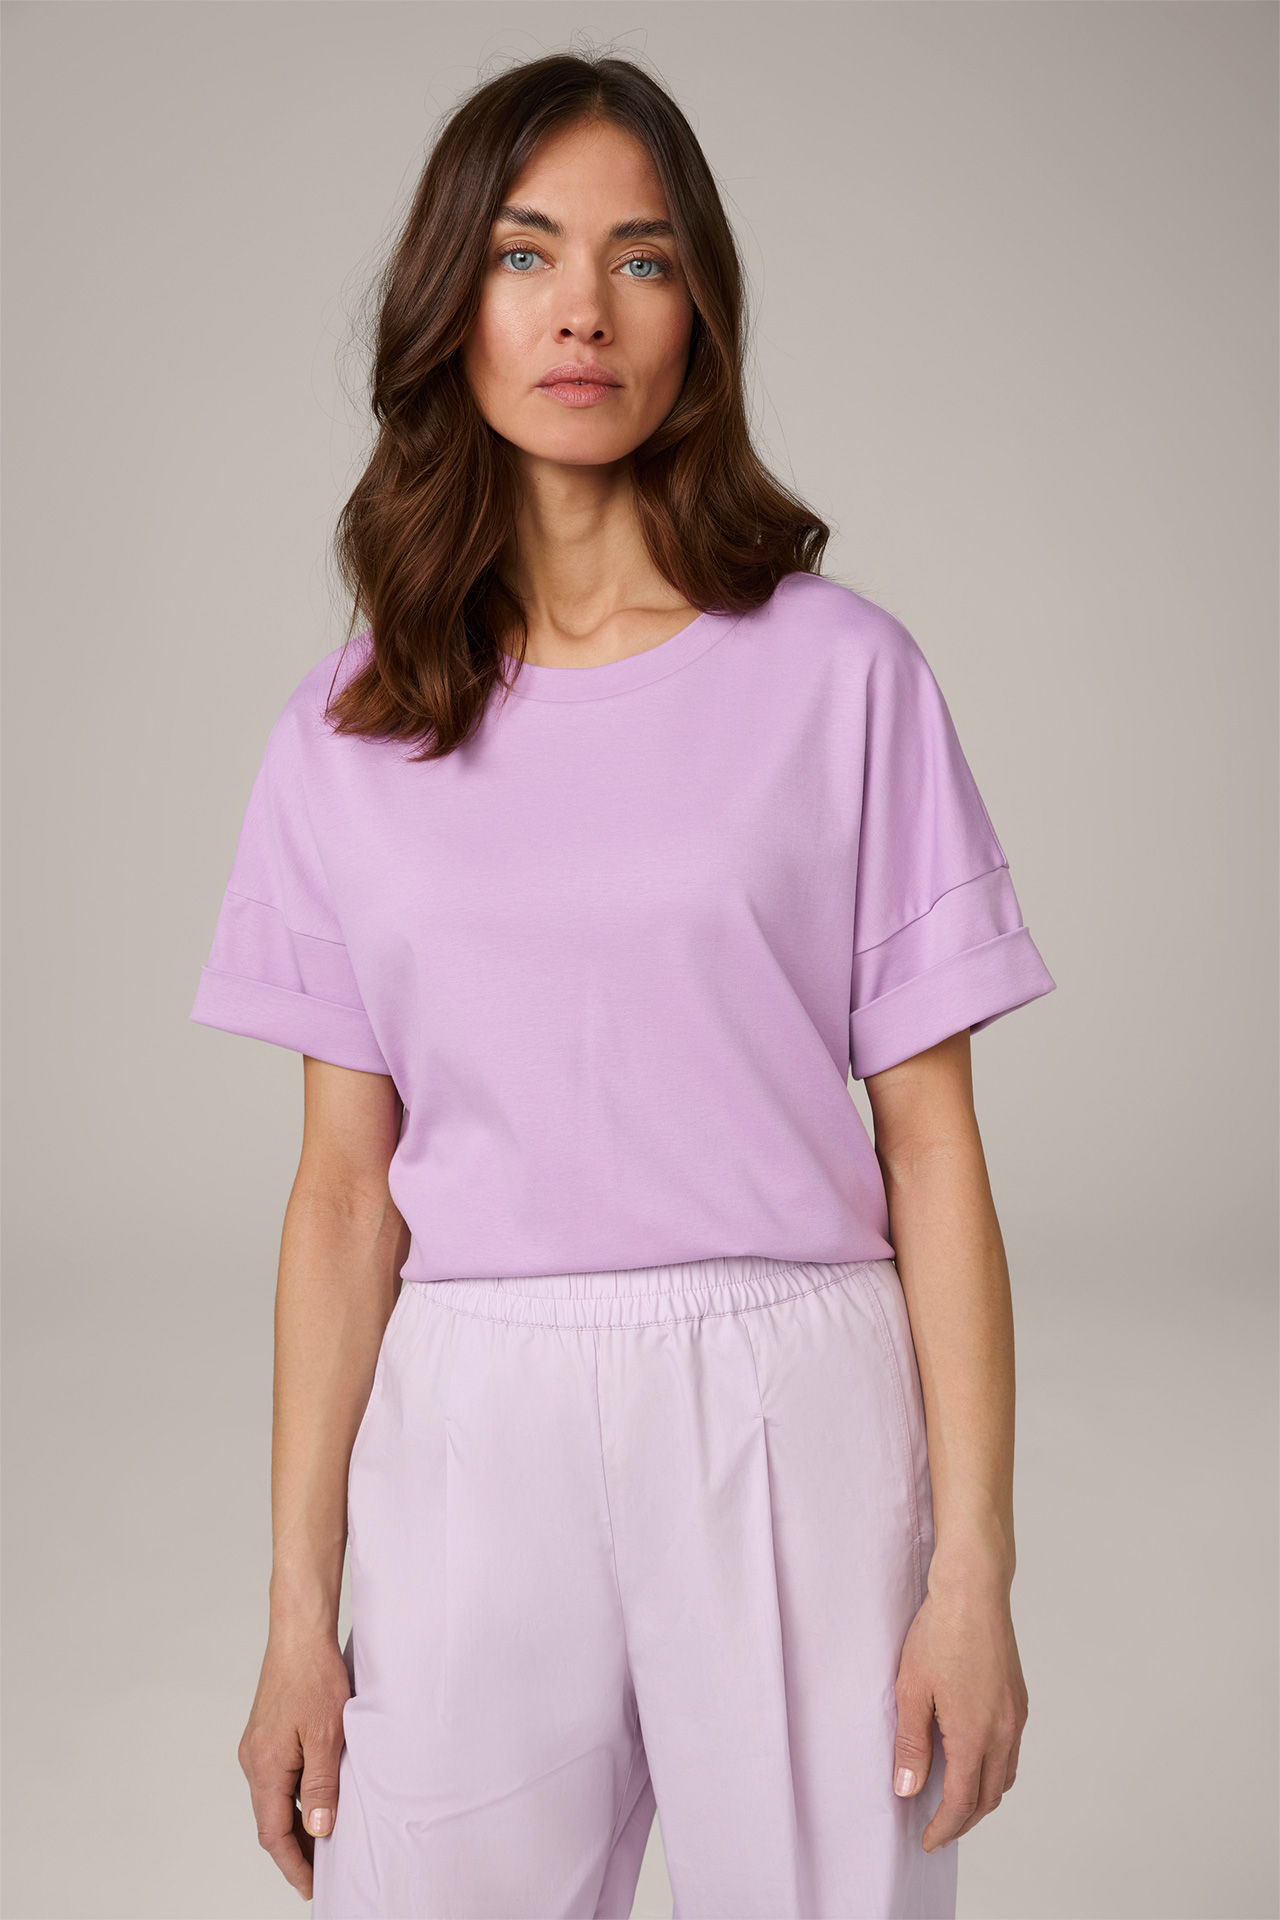 Cotton Interlock Half-Sleeved Shirt in Lilac